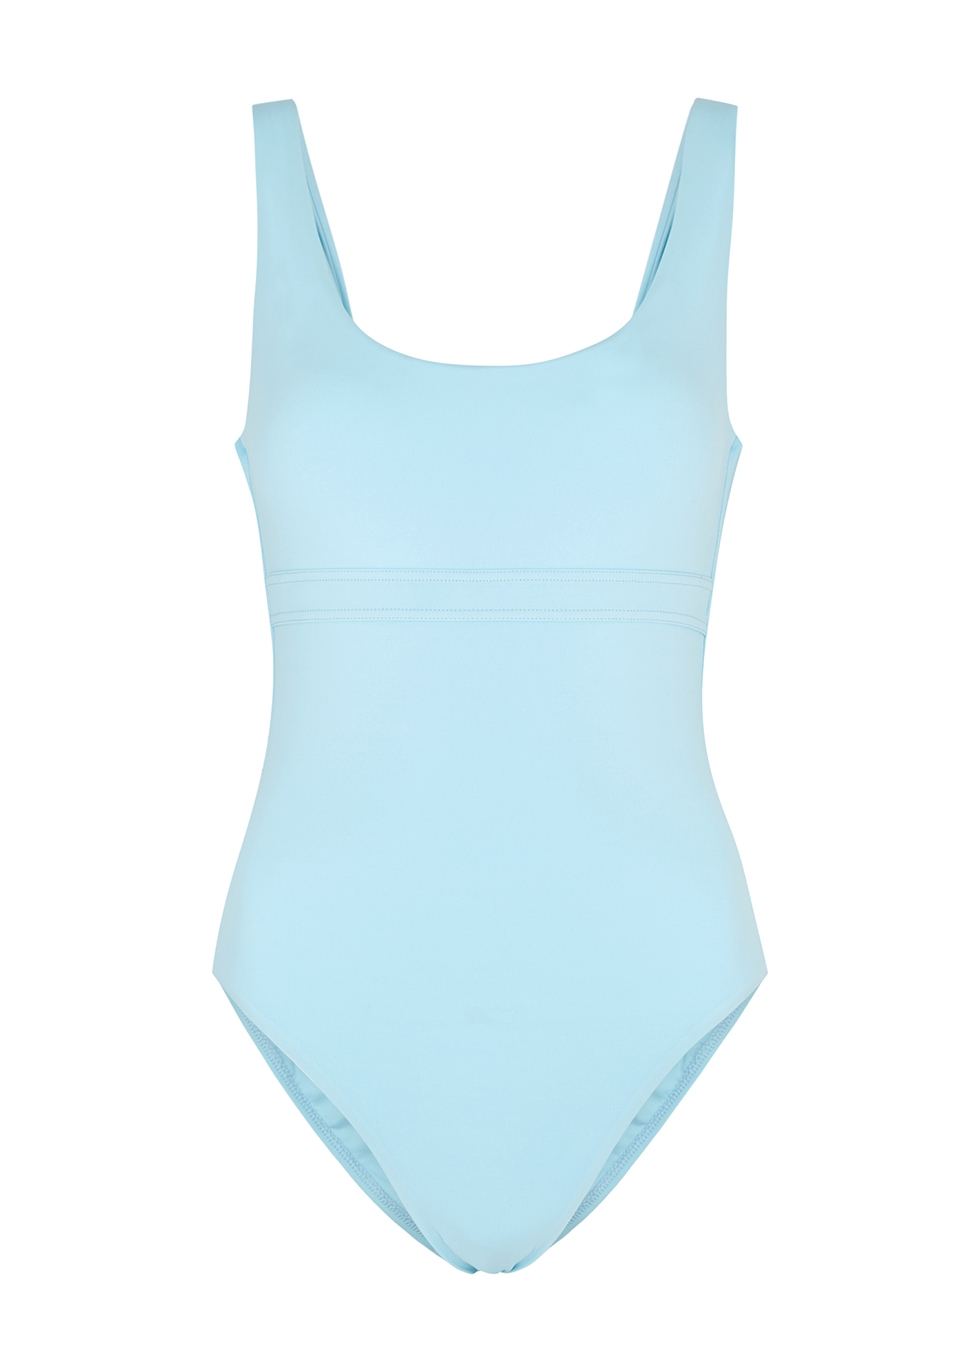 Melissa Odabash Kos light blue swimsuit - Harvey Nichols